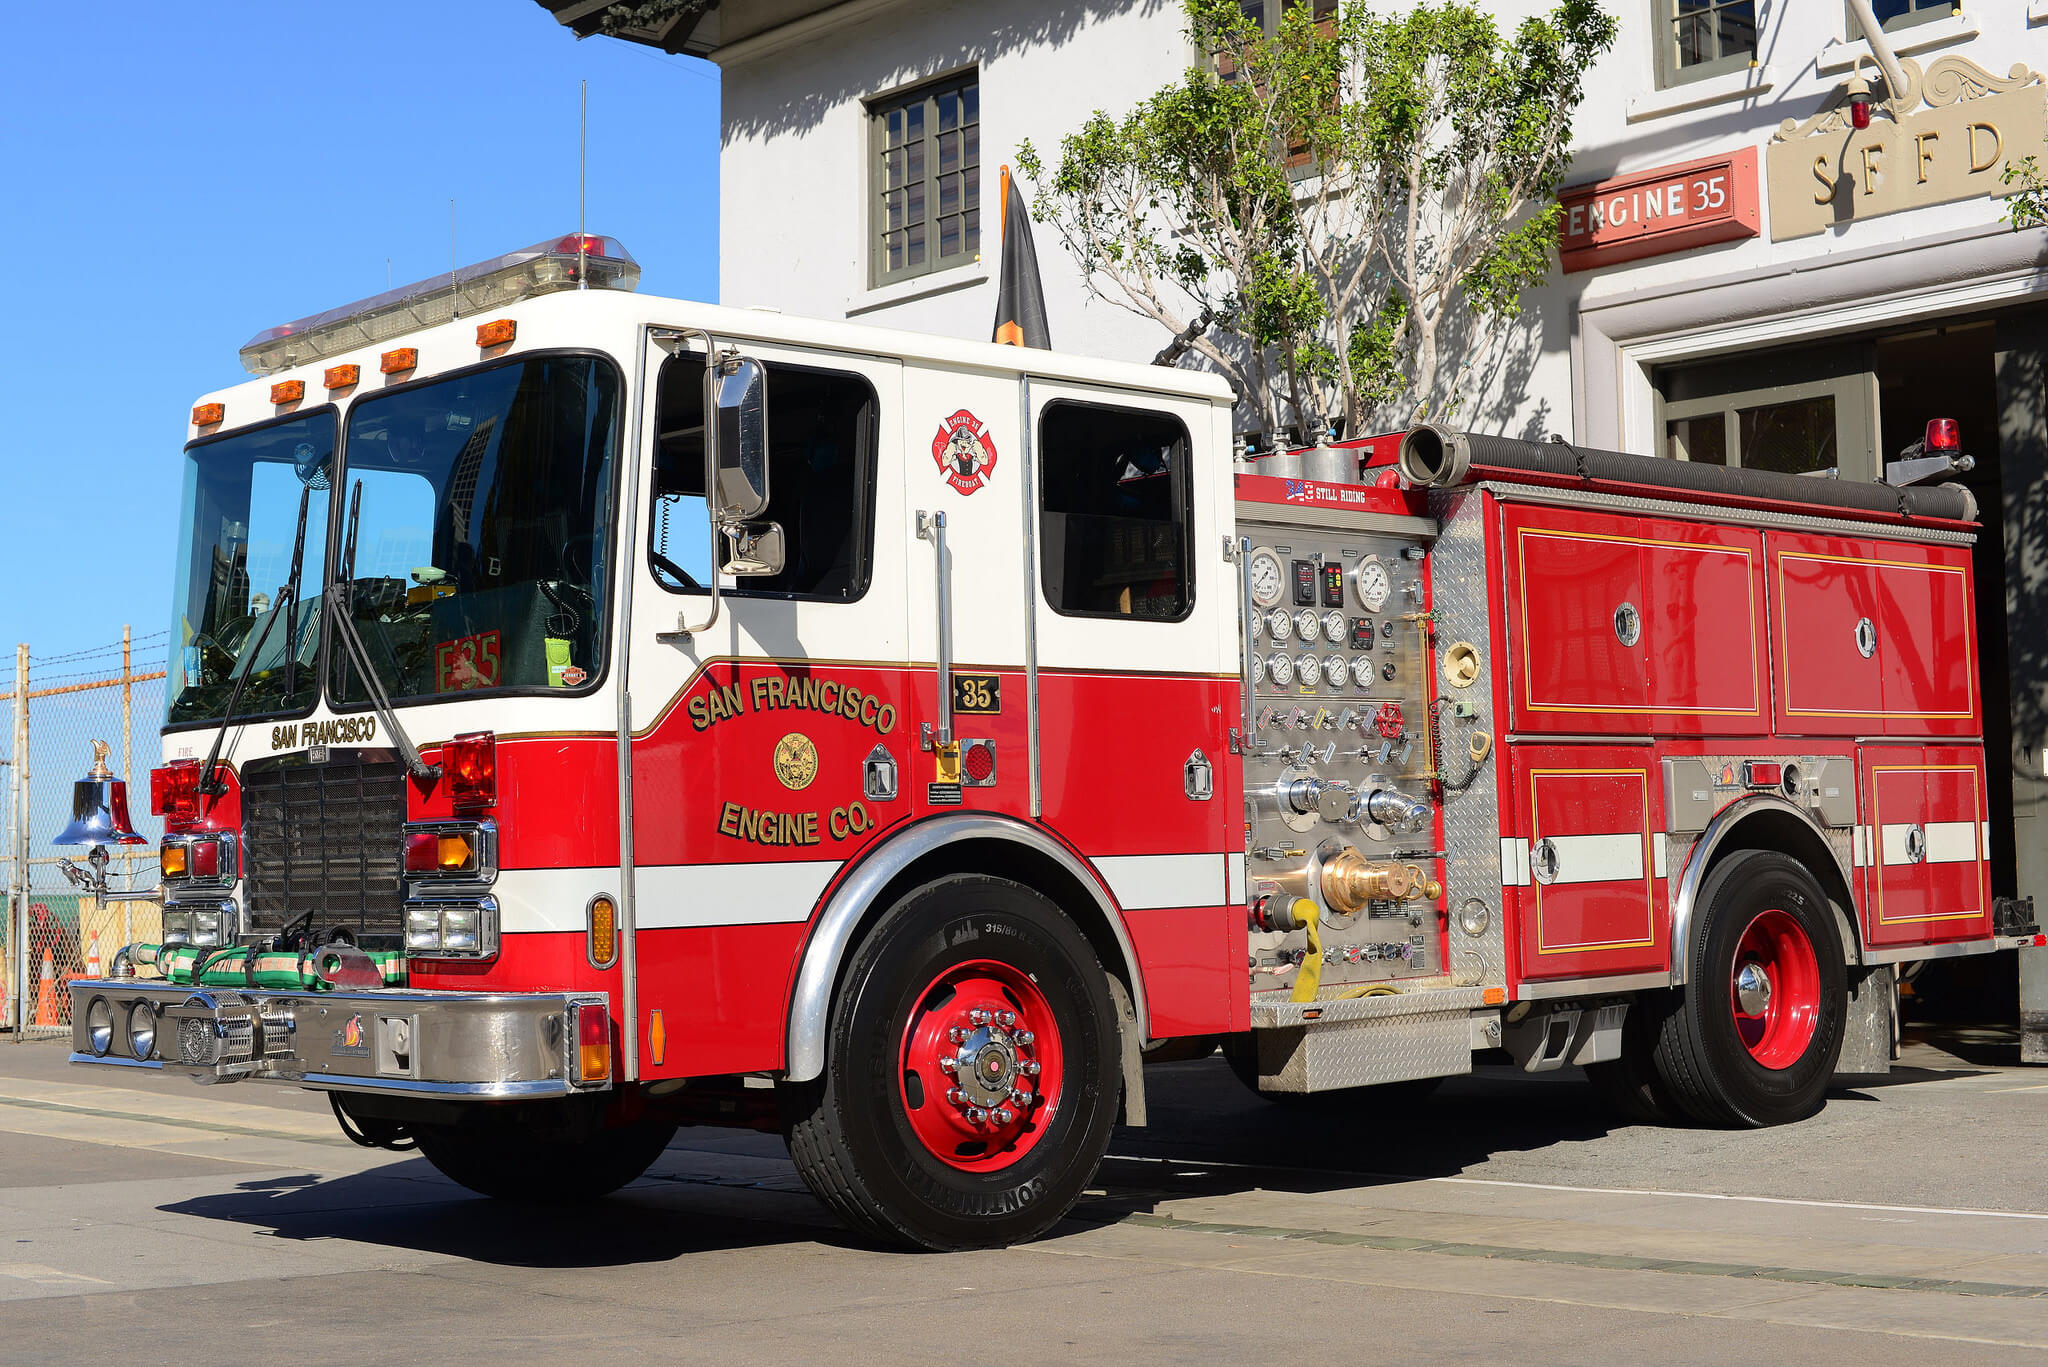 San Francisco fire truck